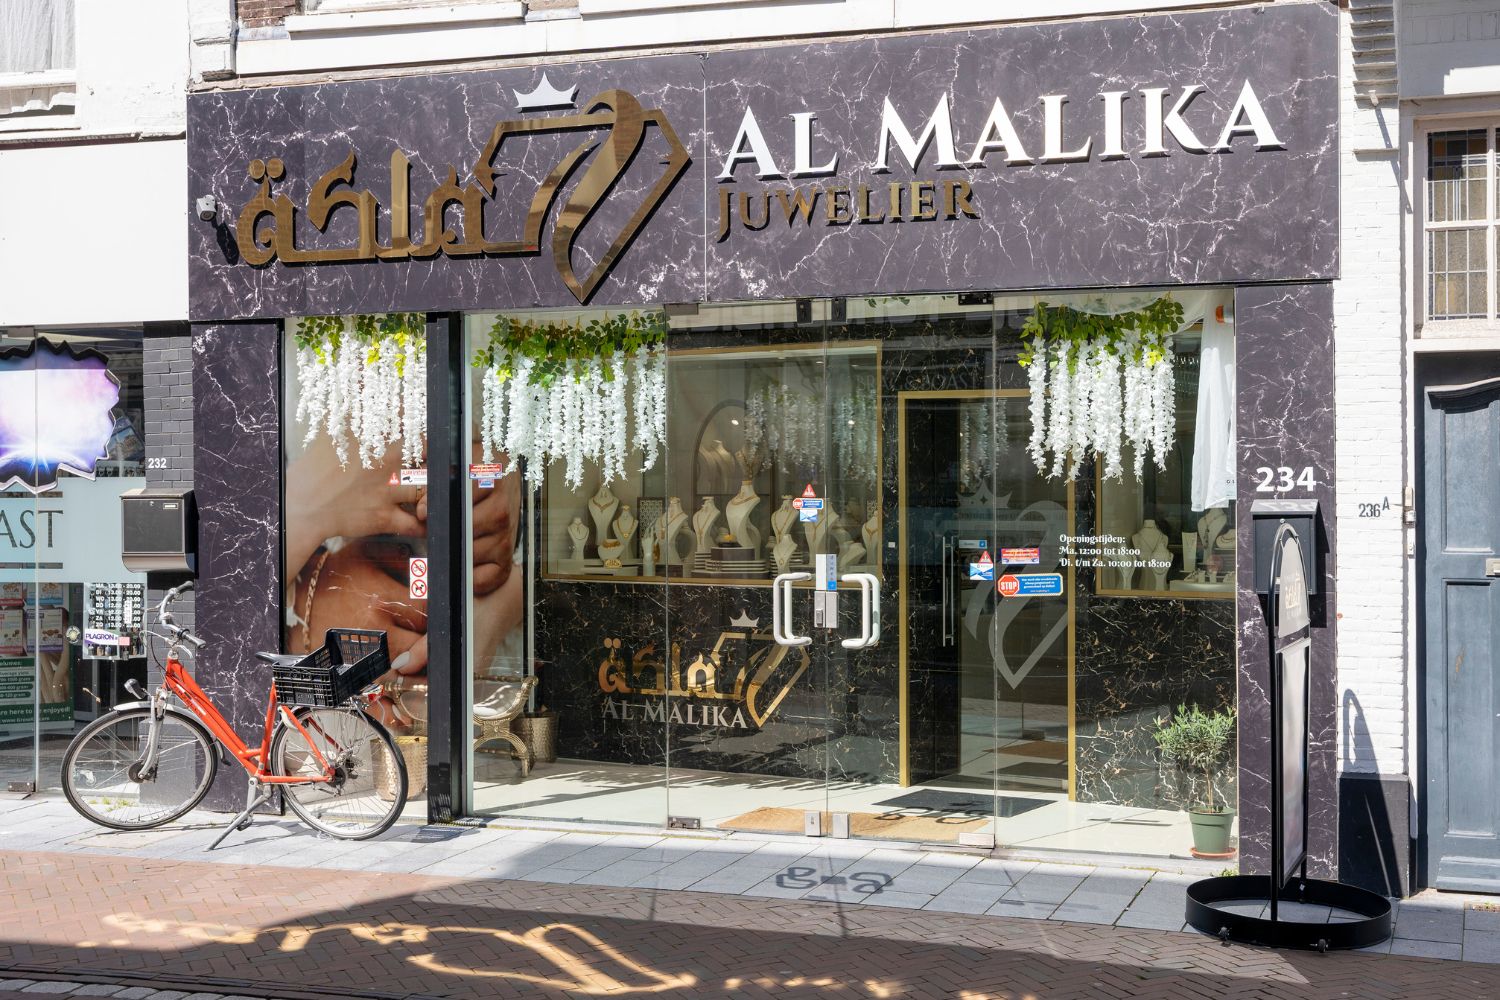 Juwelier Al-Malika